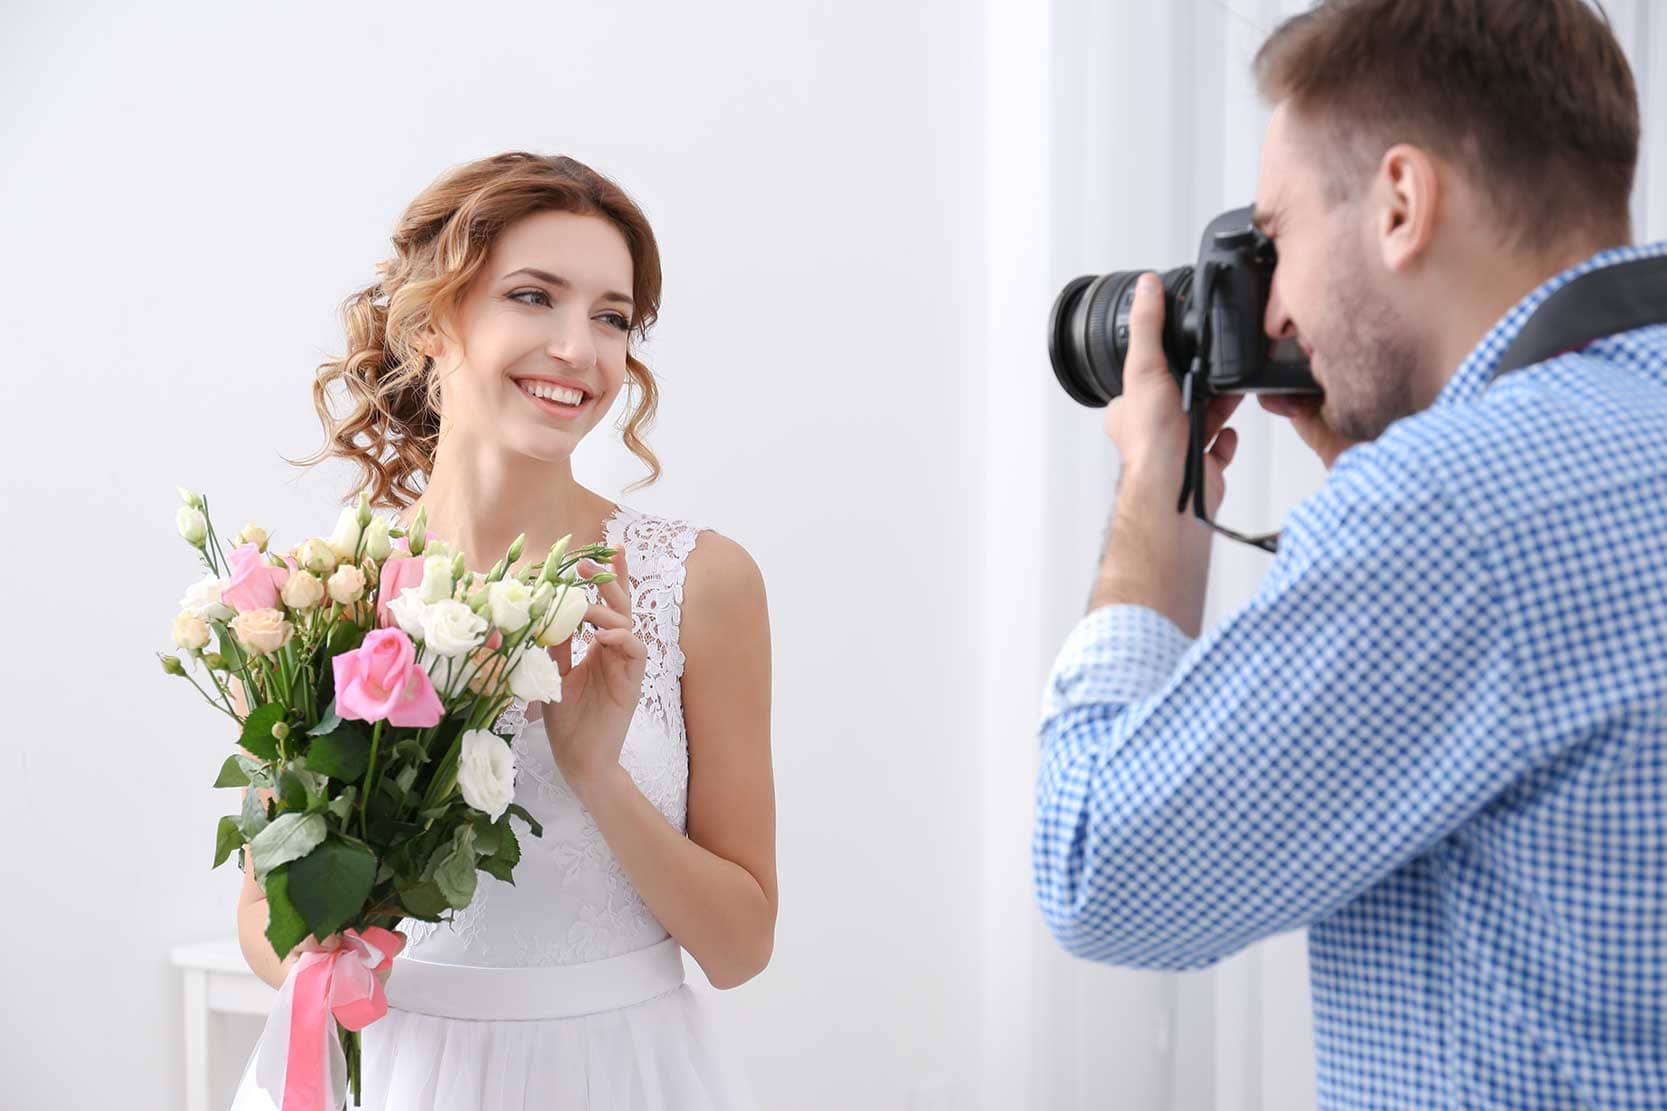 A wedding photographer taking a photo of a bride